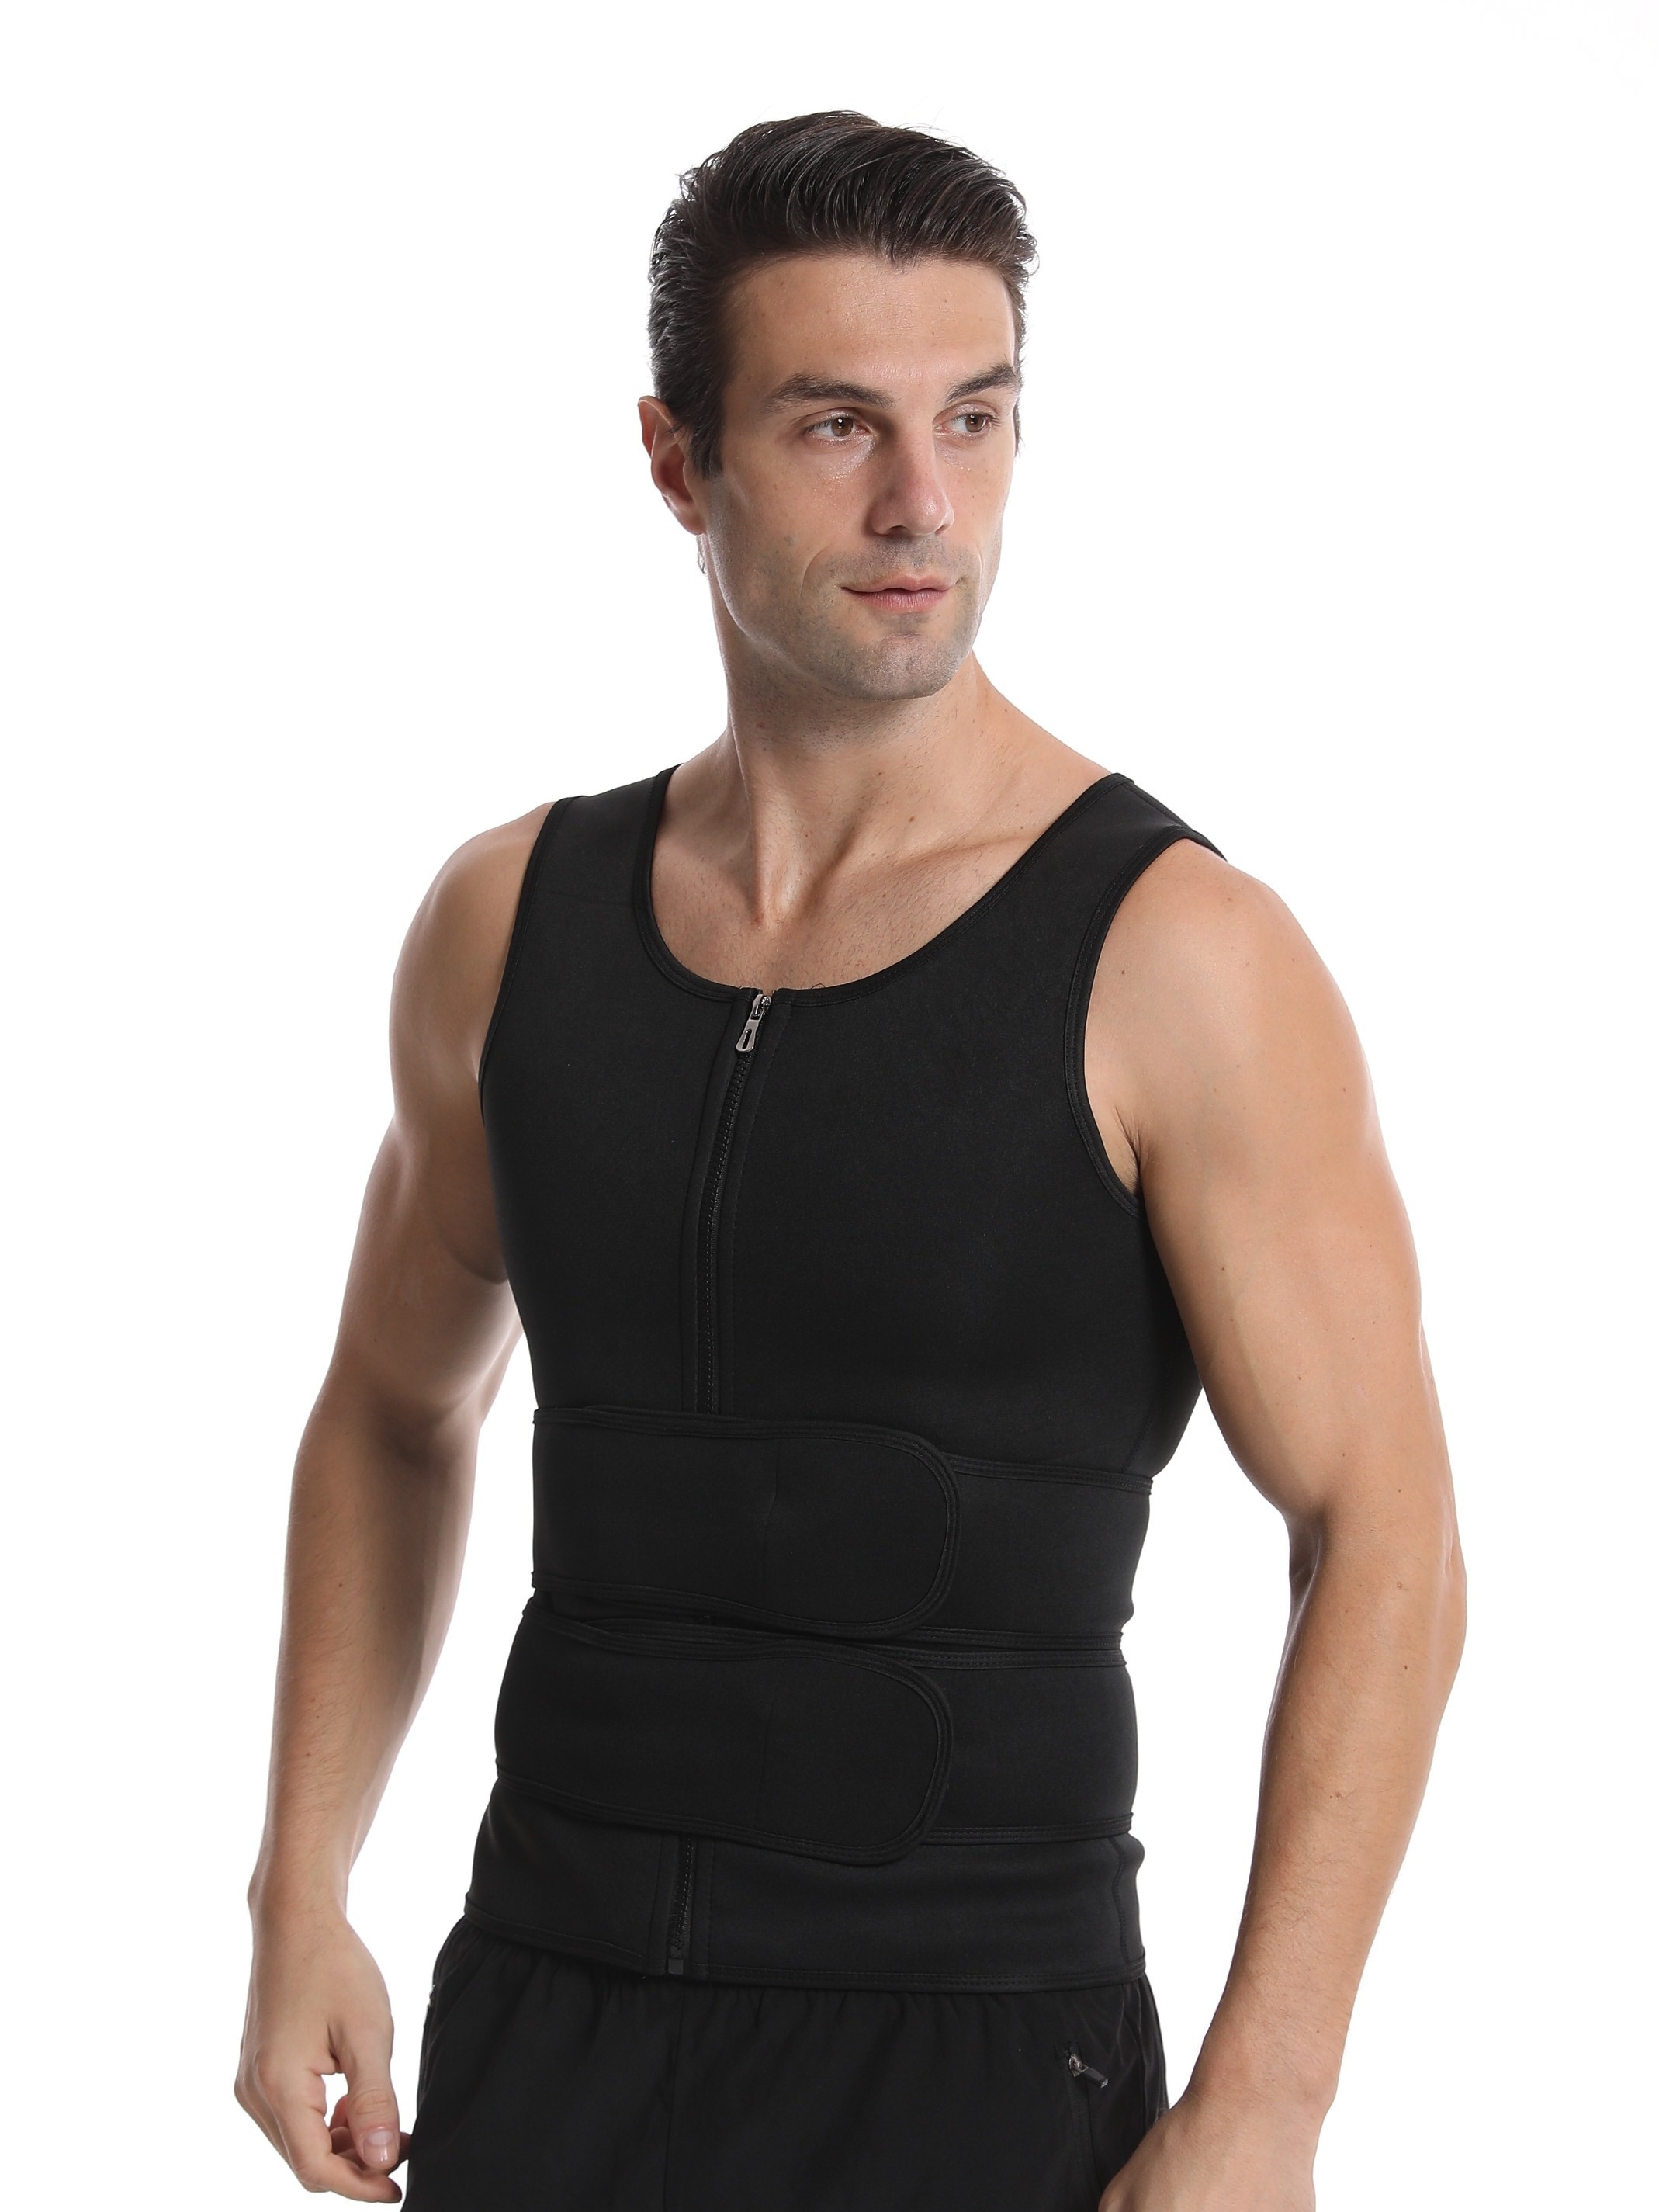 Men Sauna Shirt Sweat Suit Slimming Vest Workout Tank Top Waist Trainer  Shaper